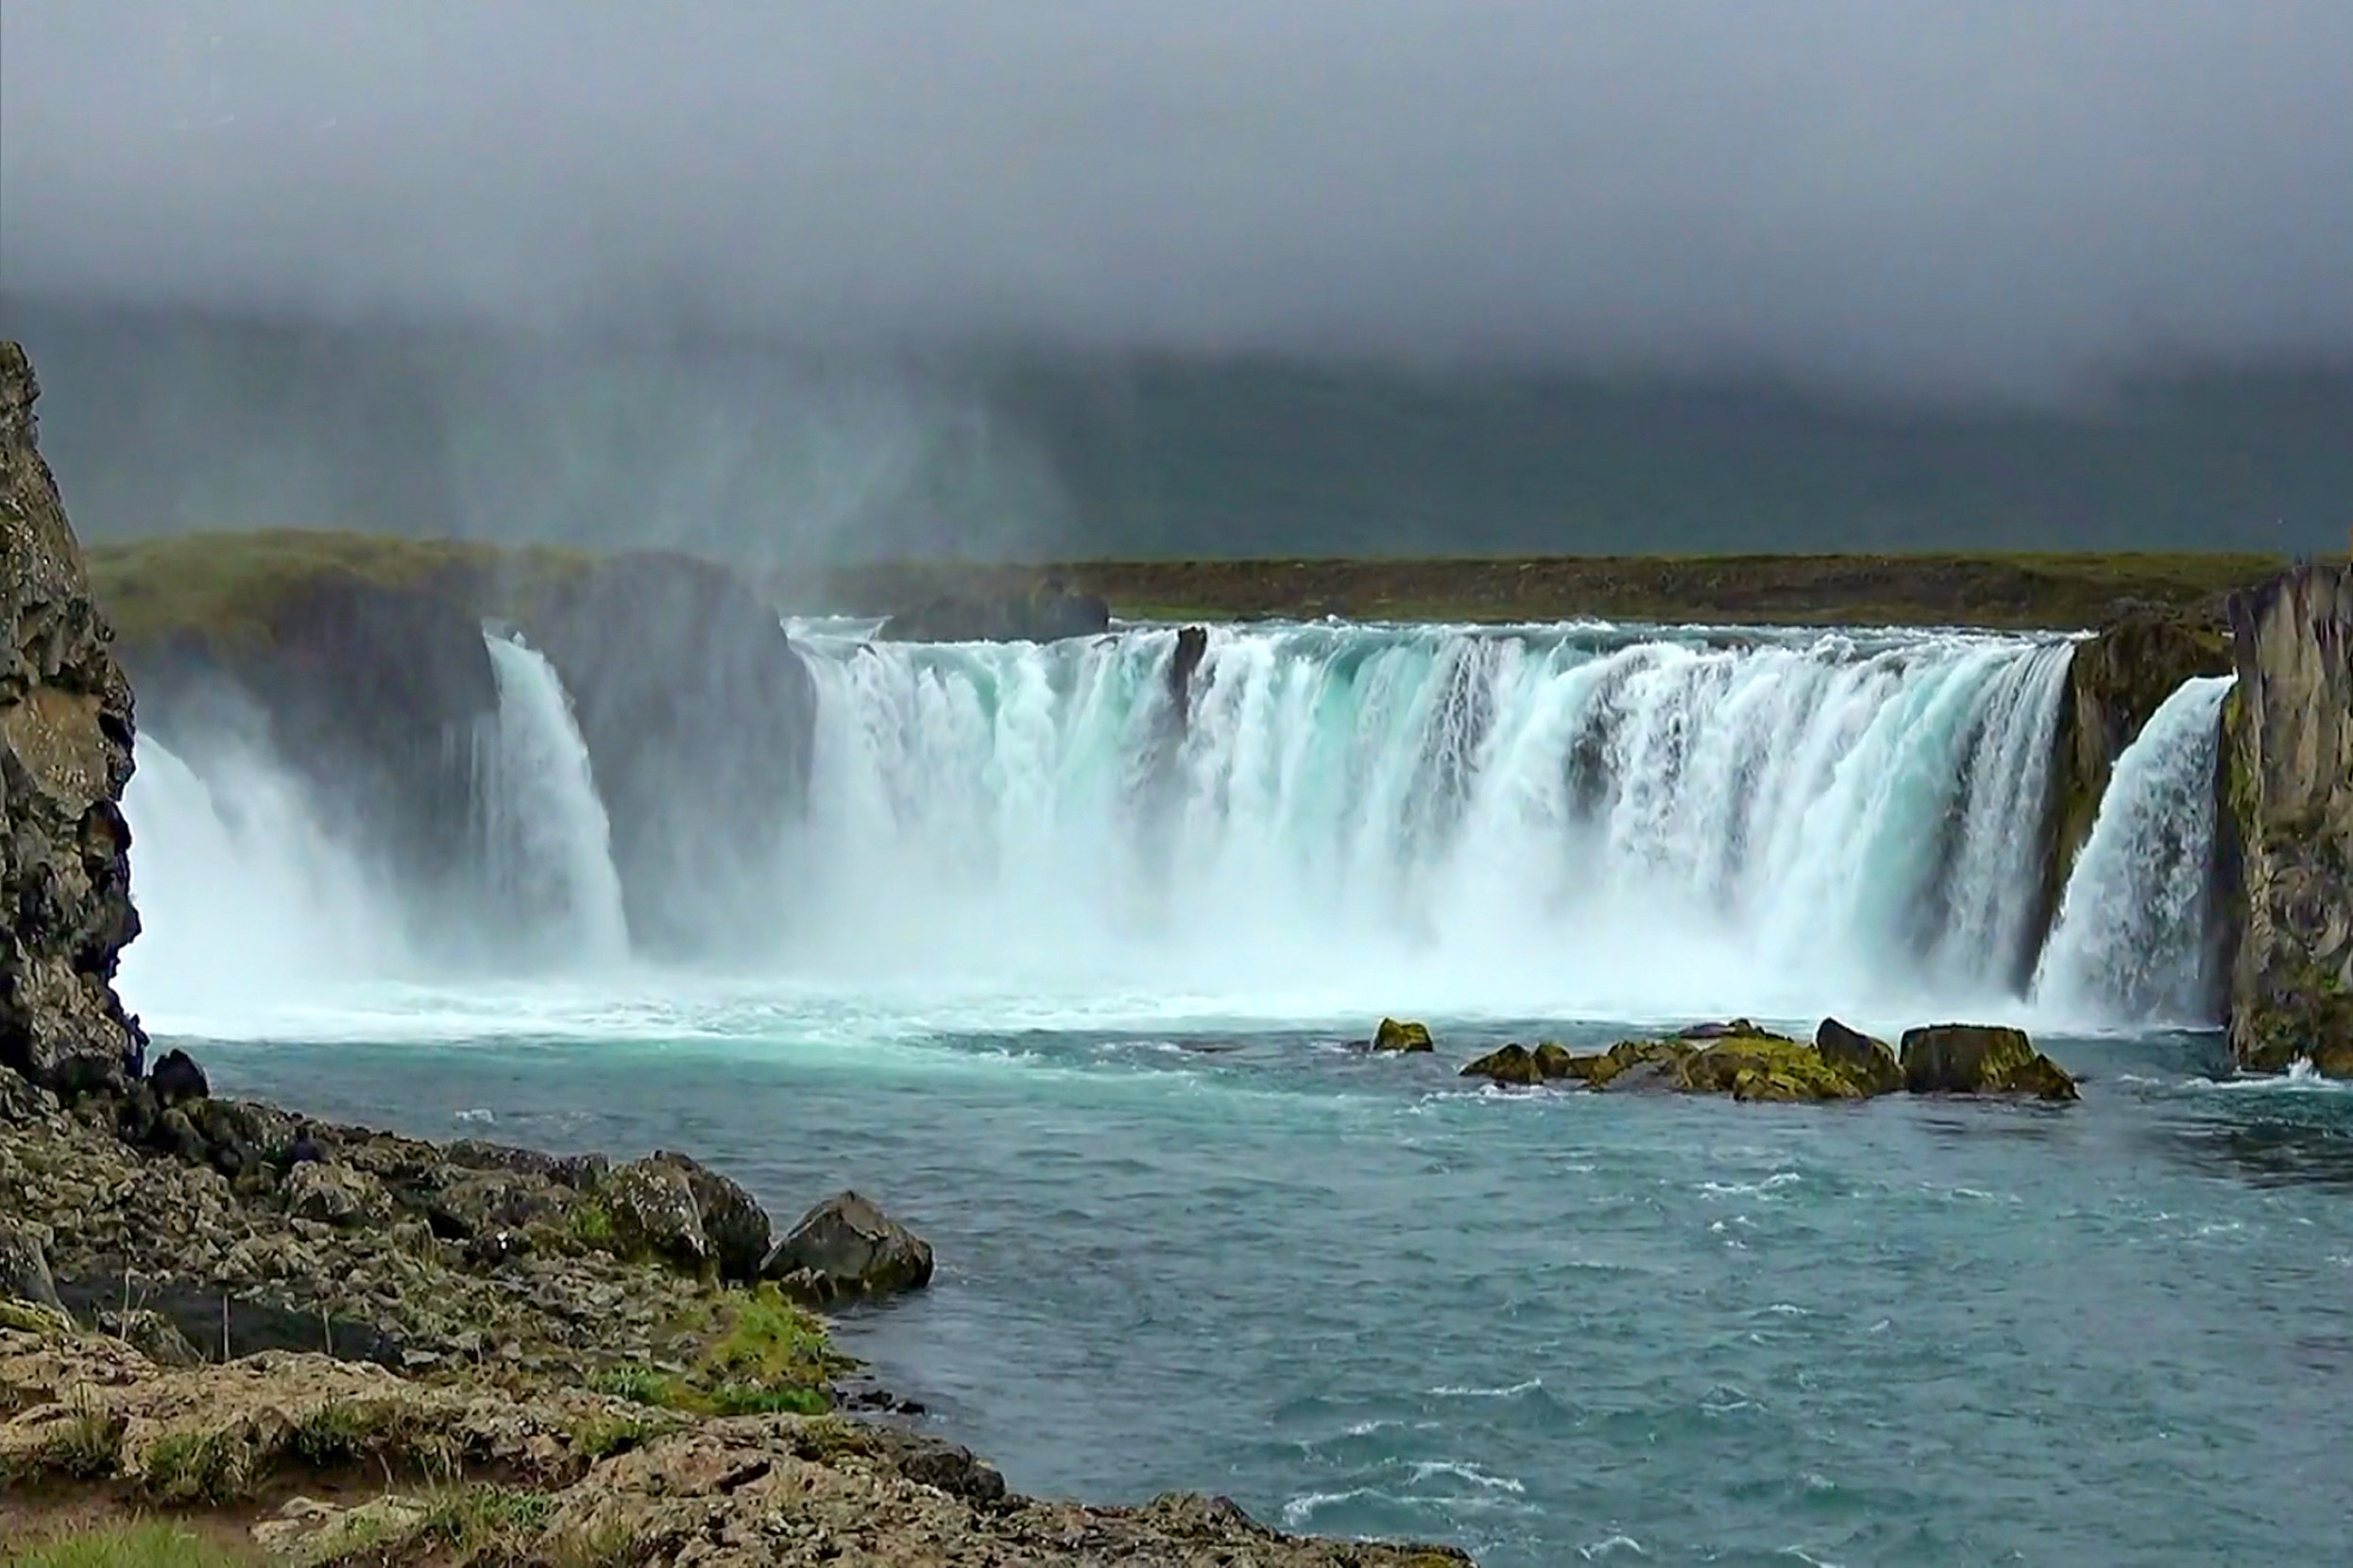 Les chutes de Dettifoss en Islande © W. Bulach - licence [CC BY-SA 4.0] from Wikimedia Commons